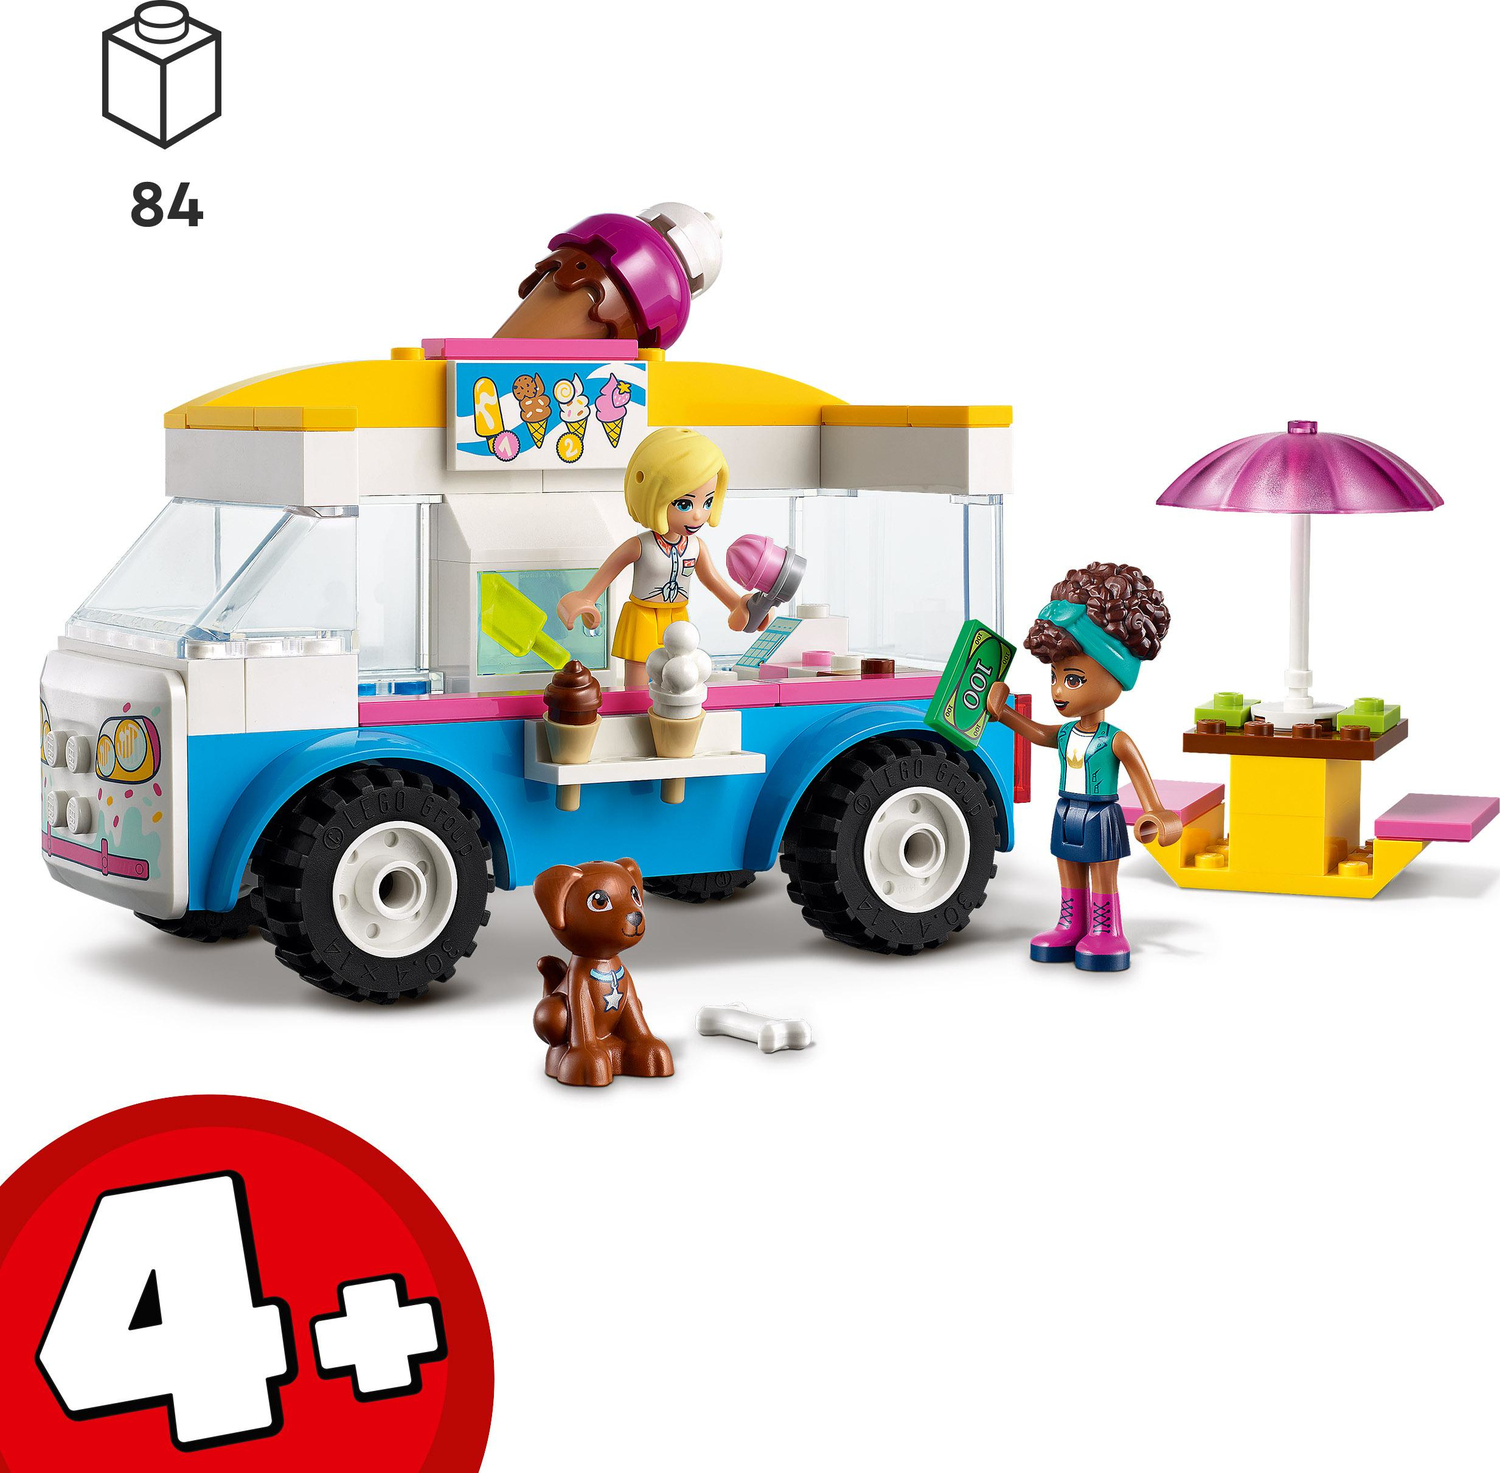 Ice-Cream Friends Toy Set LEGO - Truck Toys Imagination 4+